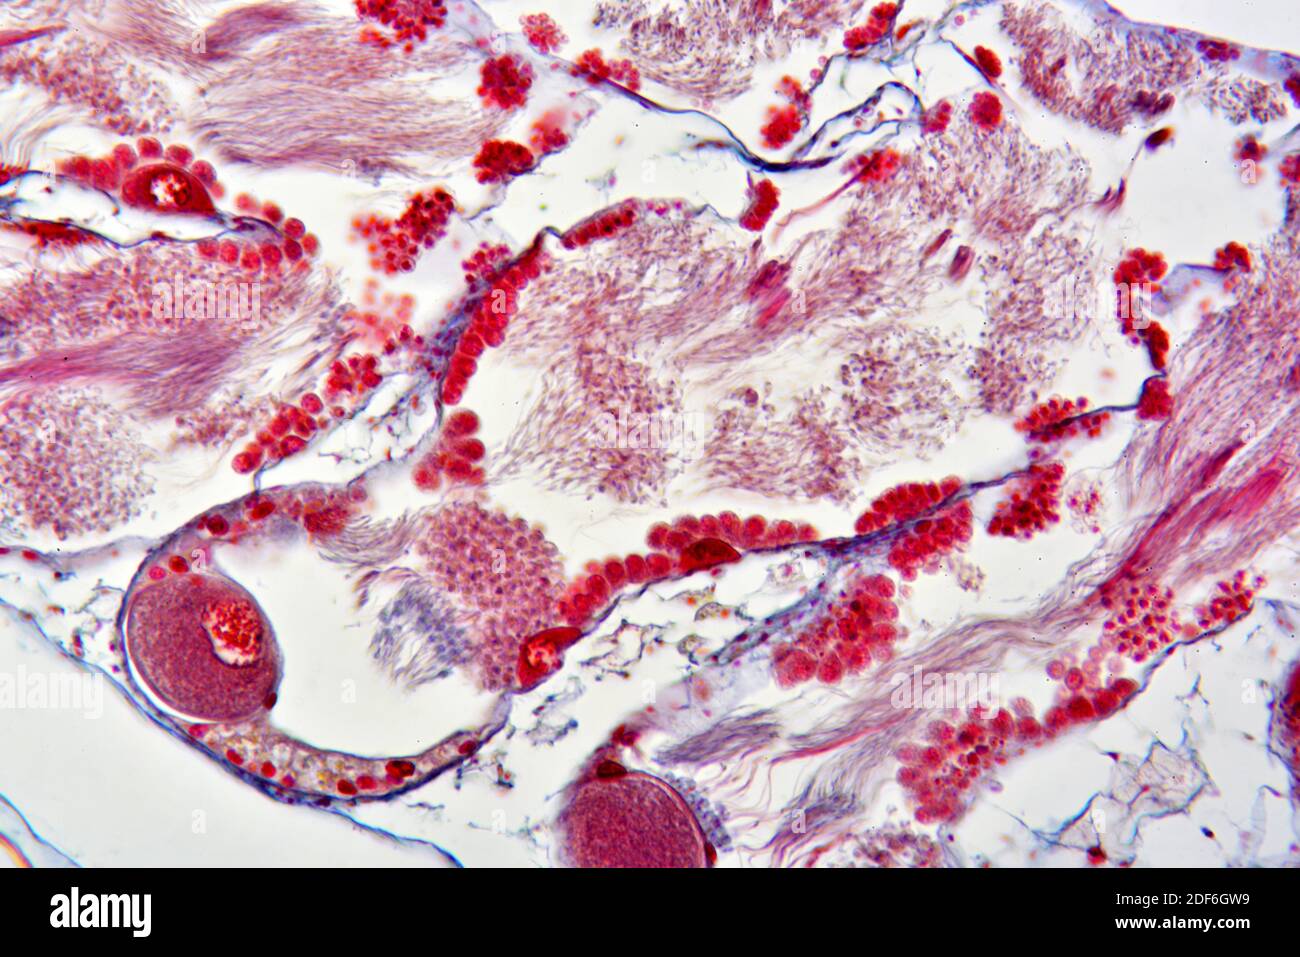 Lumaca romana (Helix pomatia), ghiandola ermafrodite (ovotestis). Microscopio ottico X200. Foto Stock